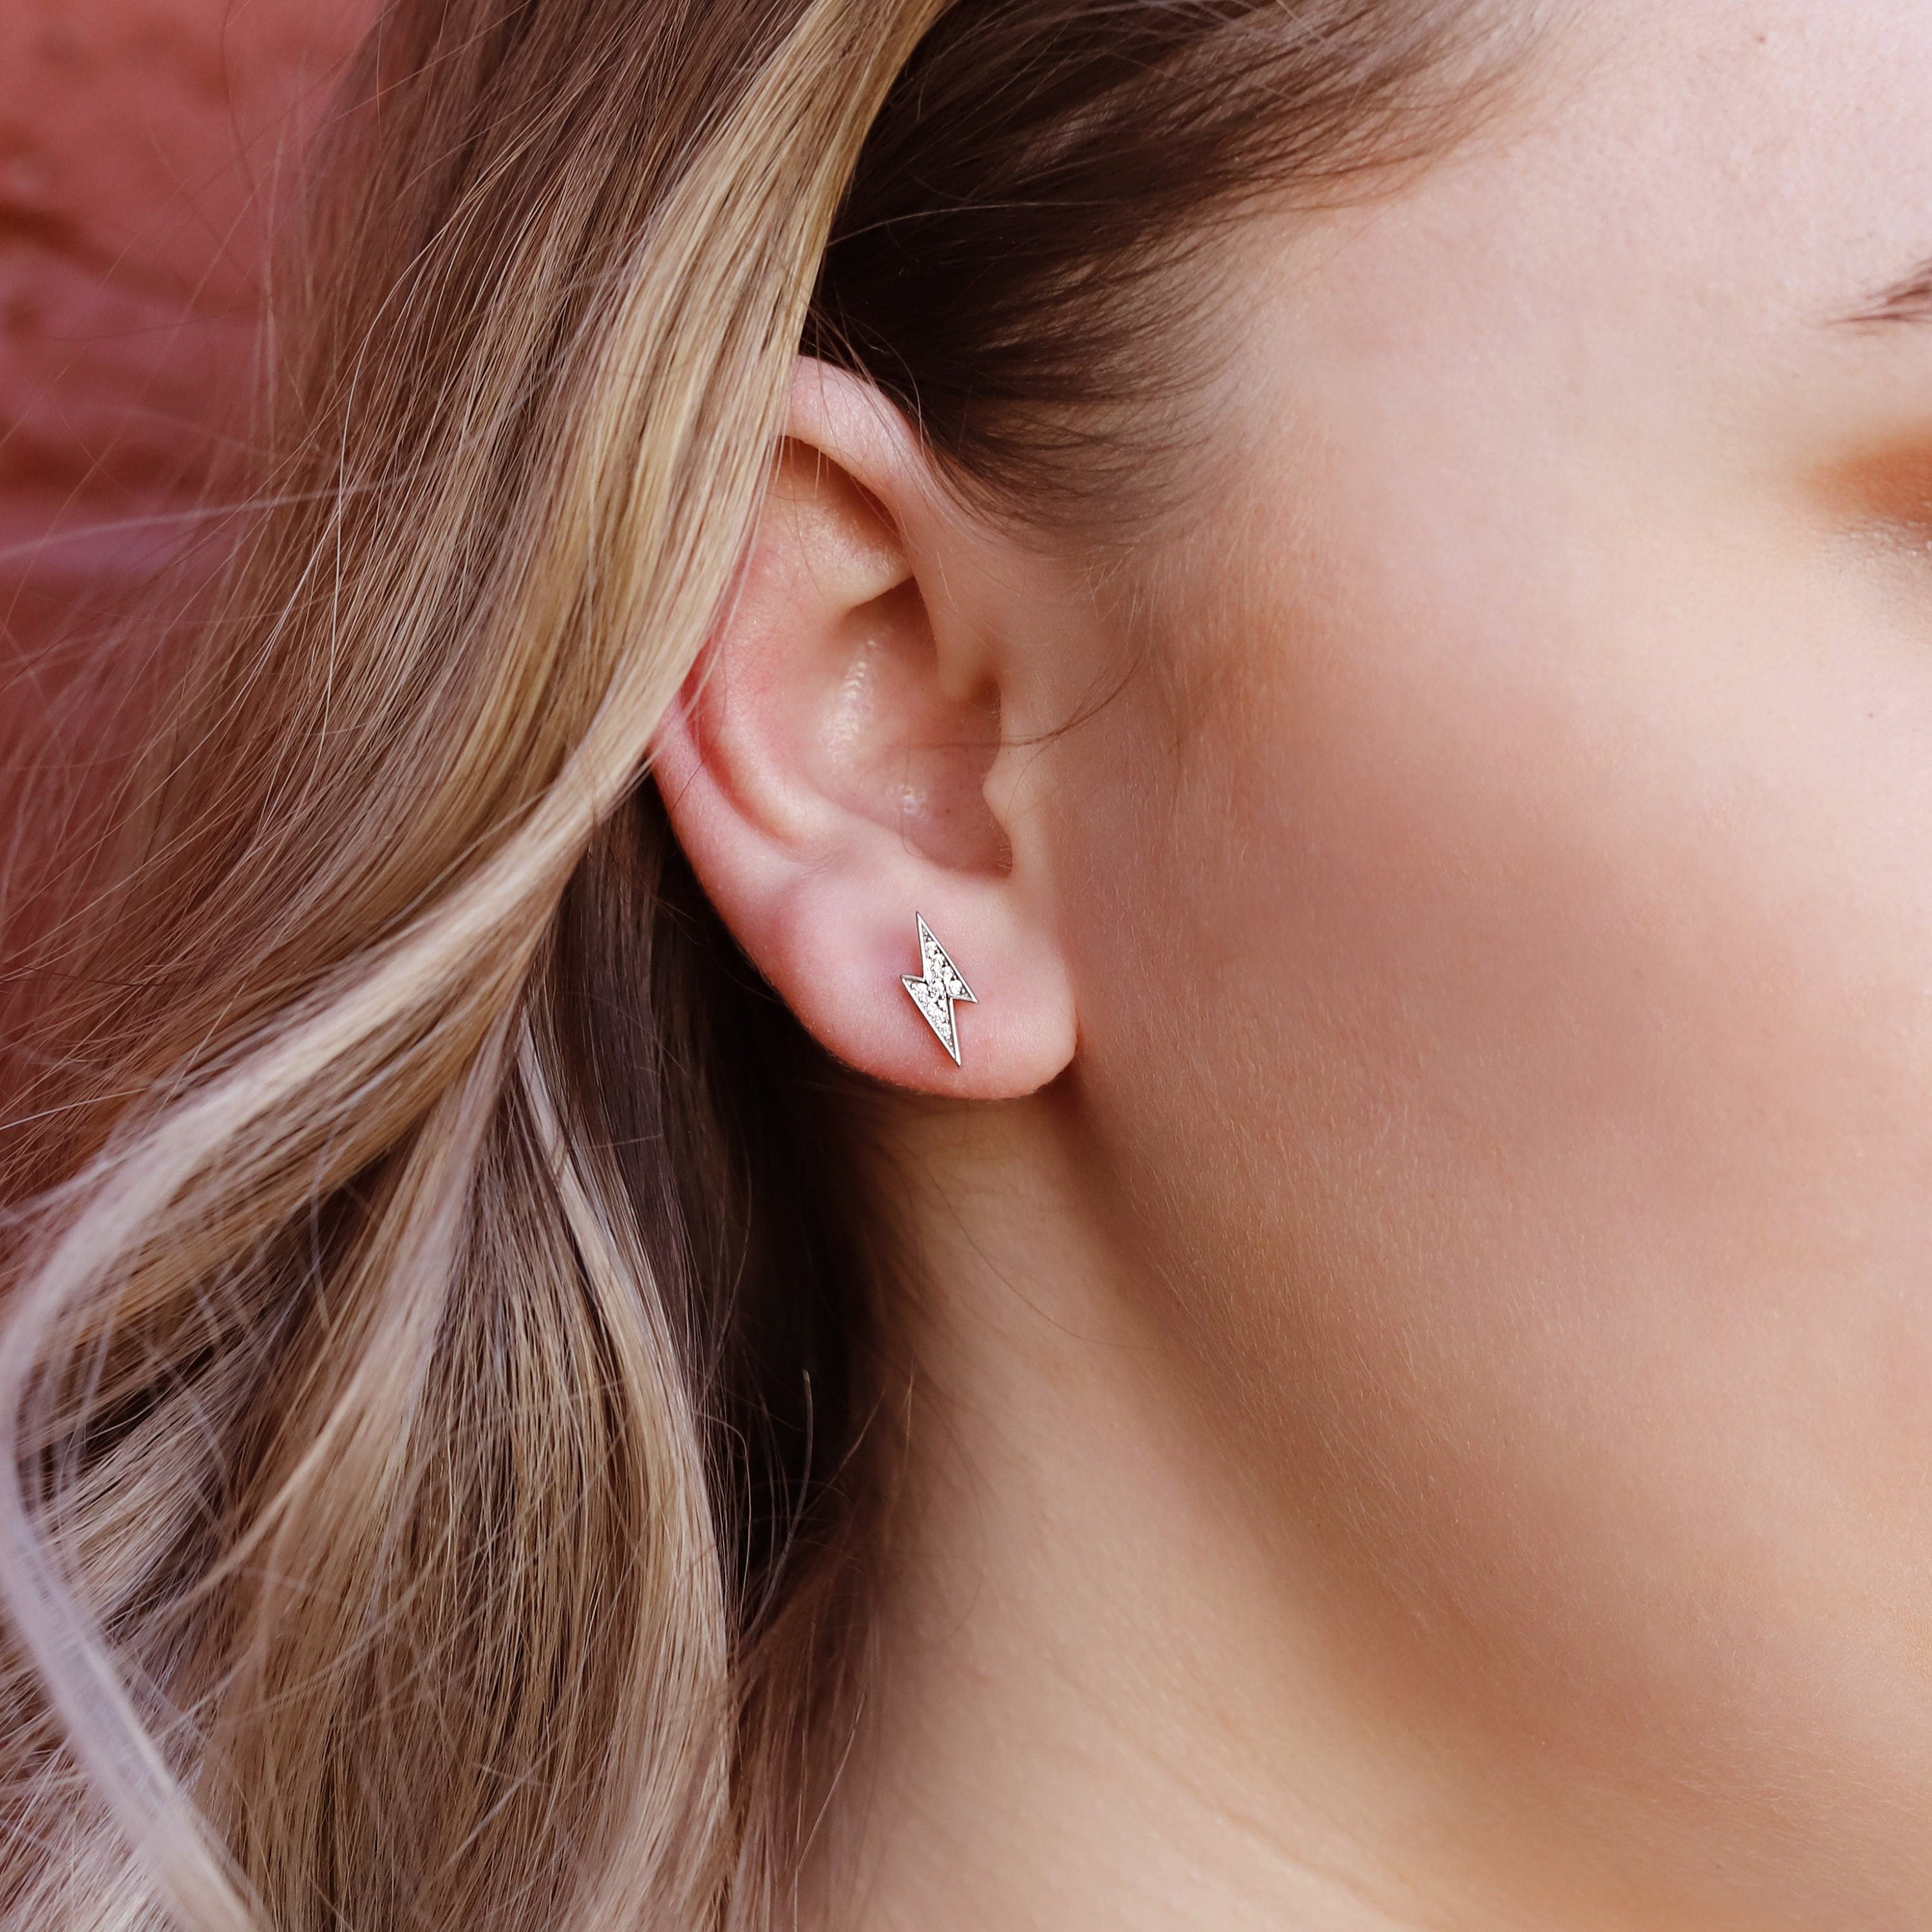 Tiny Stud Earrings - New Minimalist Earrings - Minimalist Earrings Spark- Studs - Tiny Earrings - Earrings Sets for Multiple Piercings